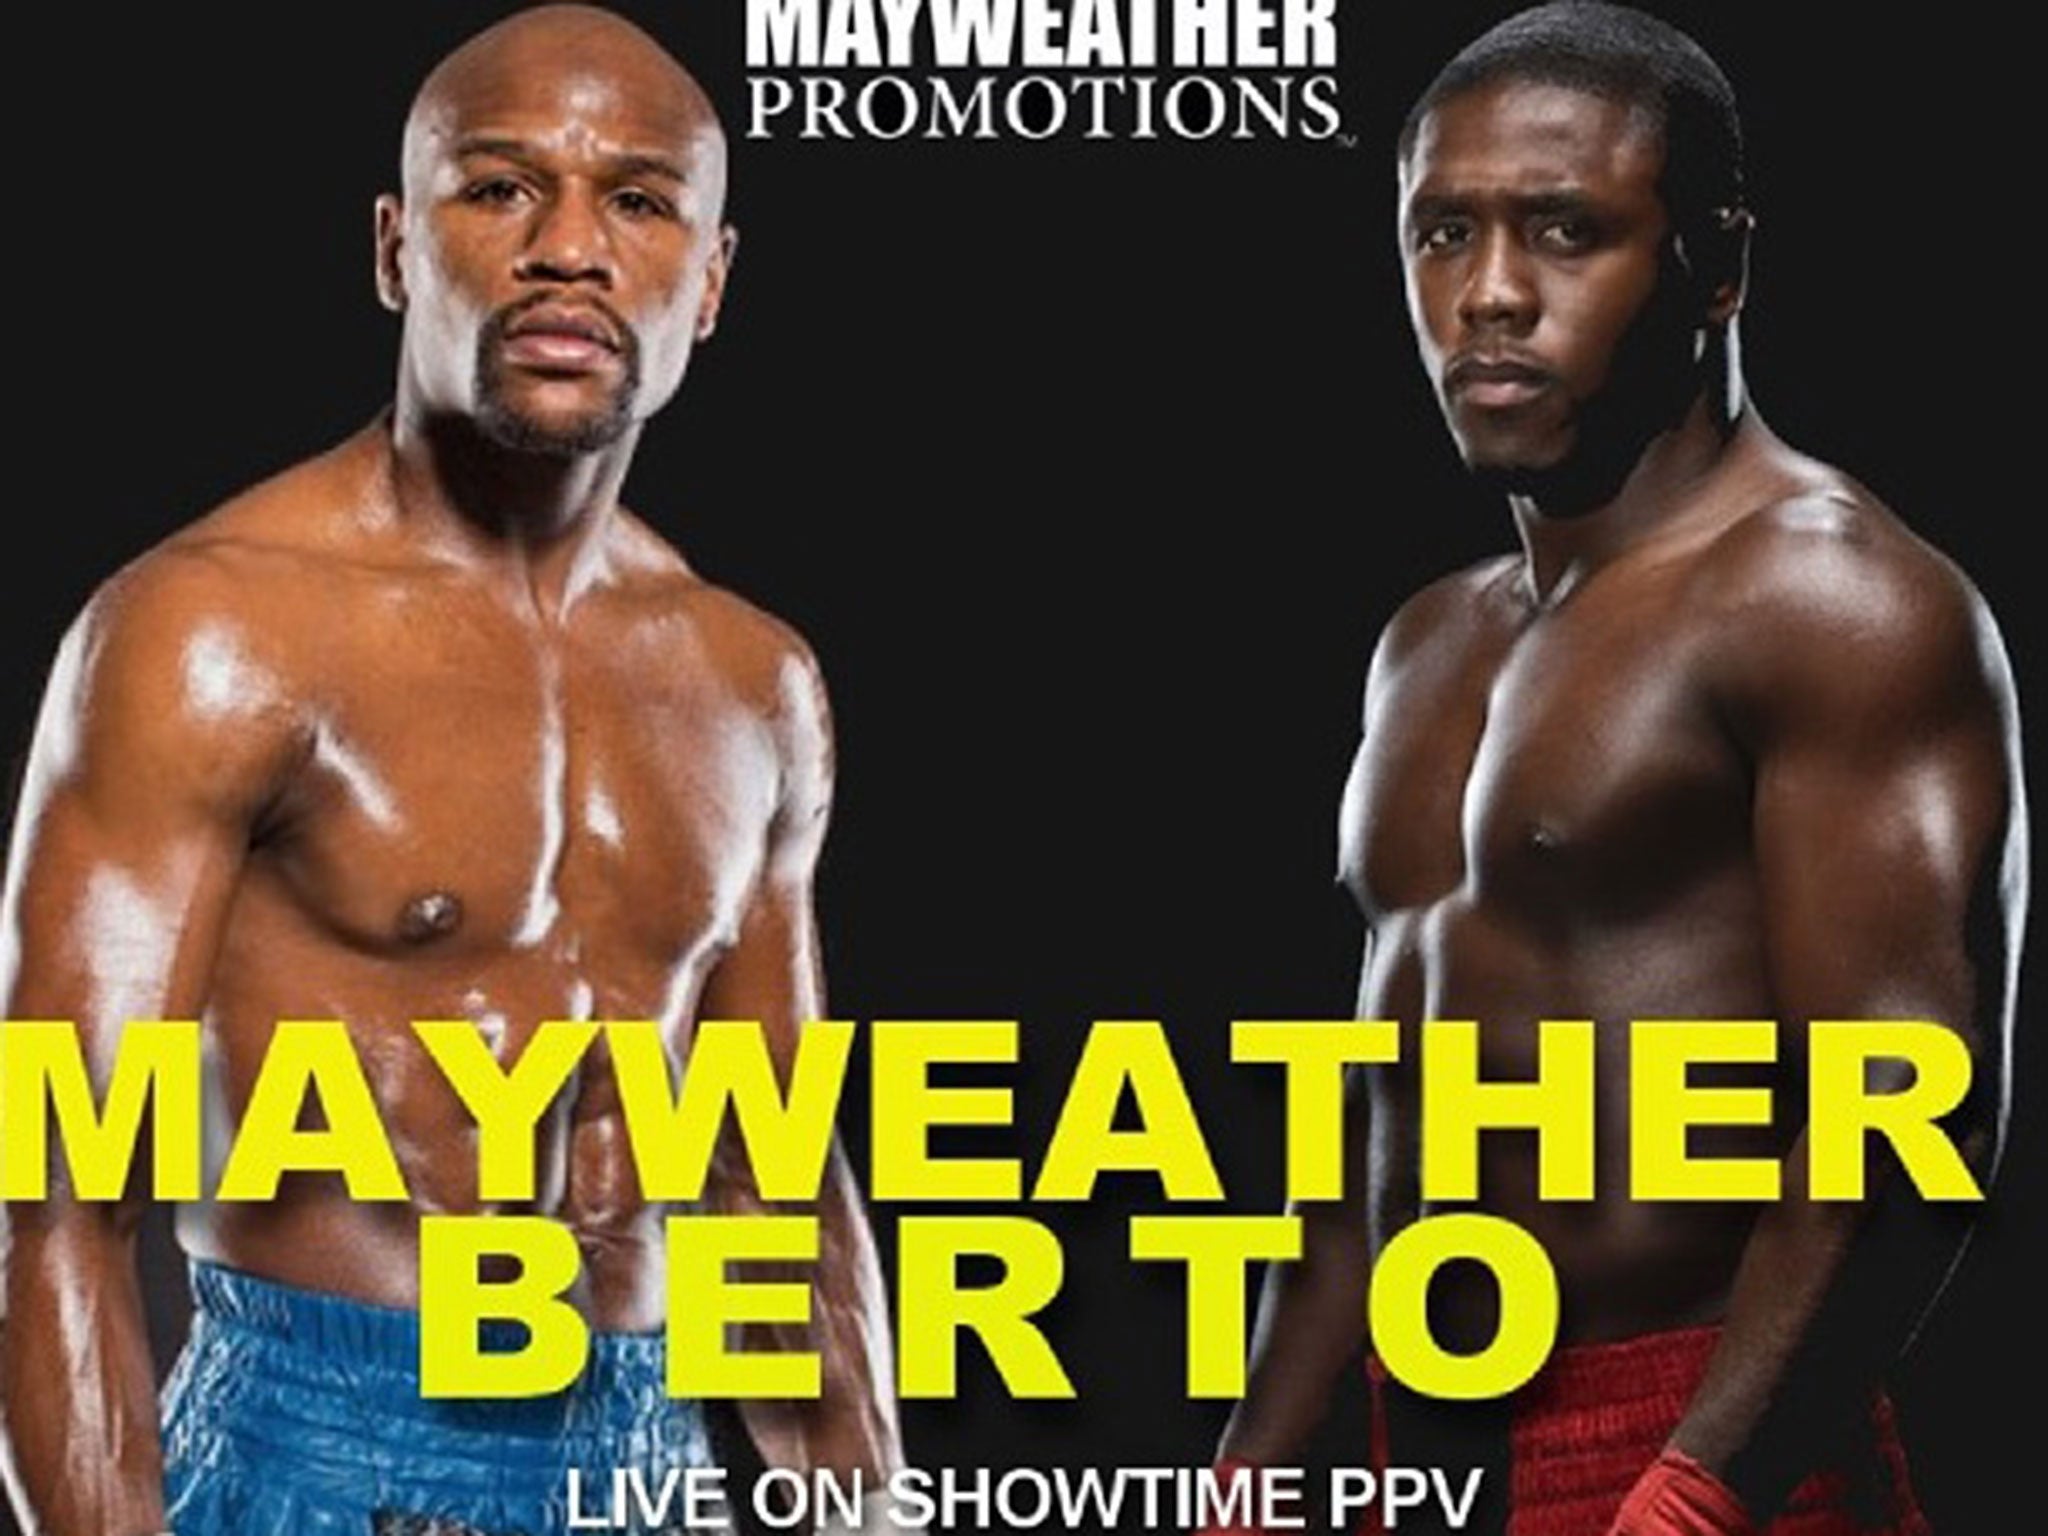 The Mayweather vs Berto fight poster